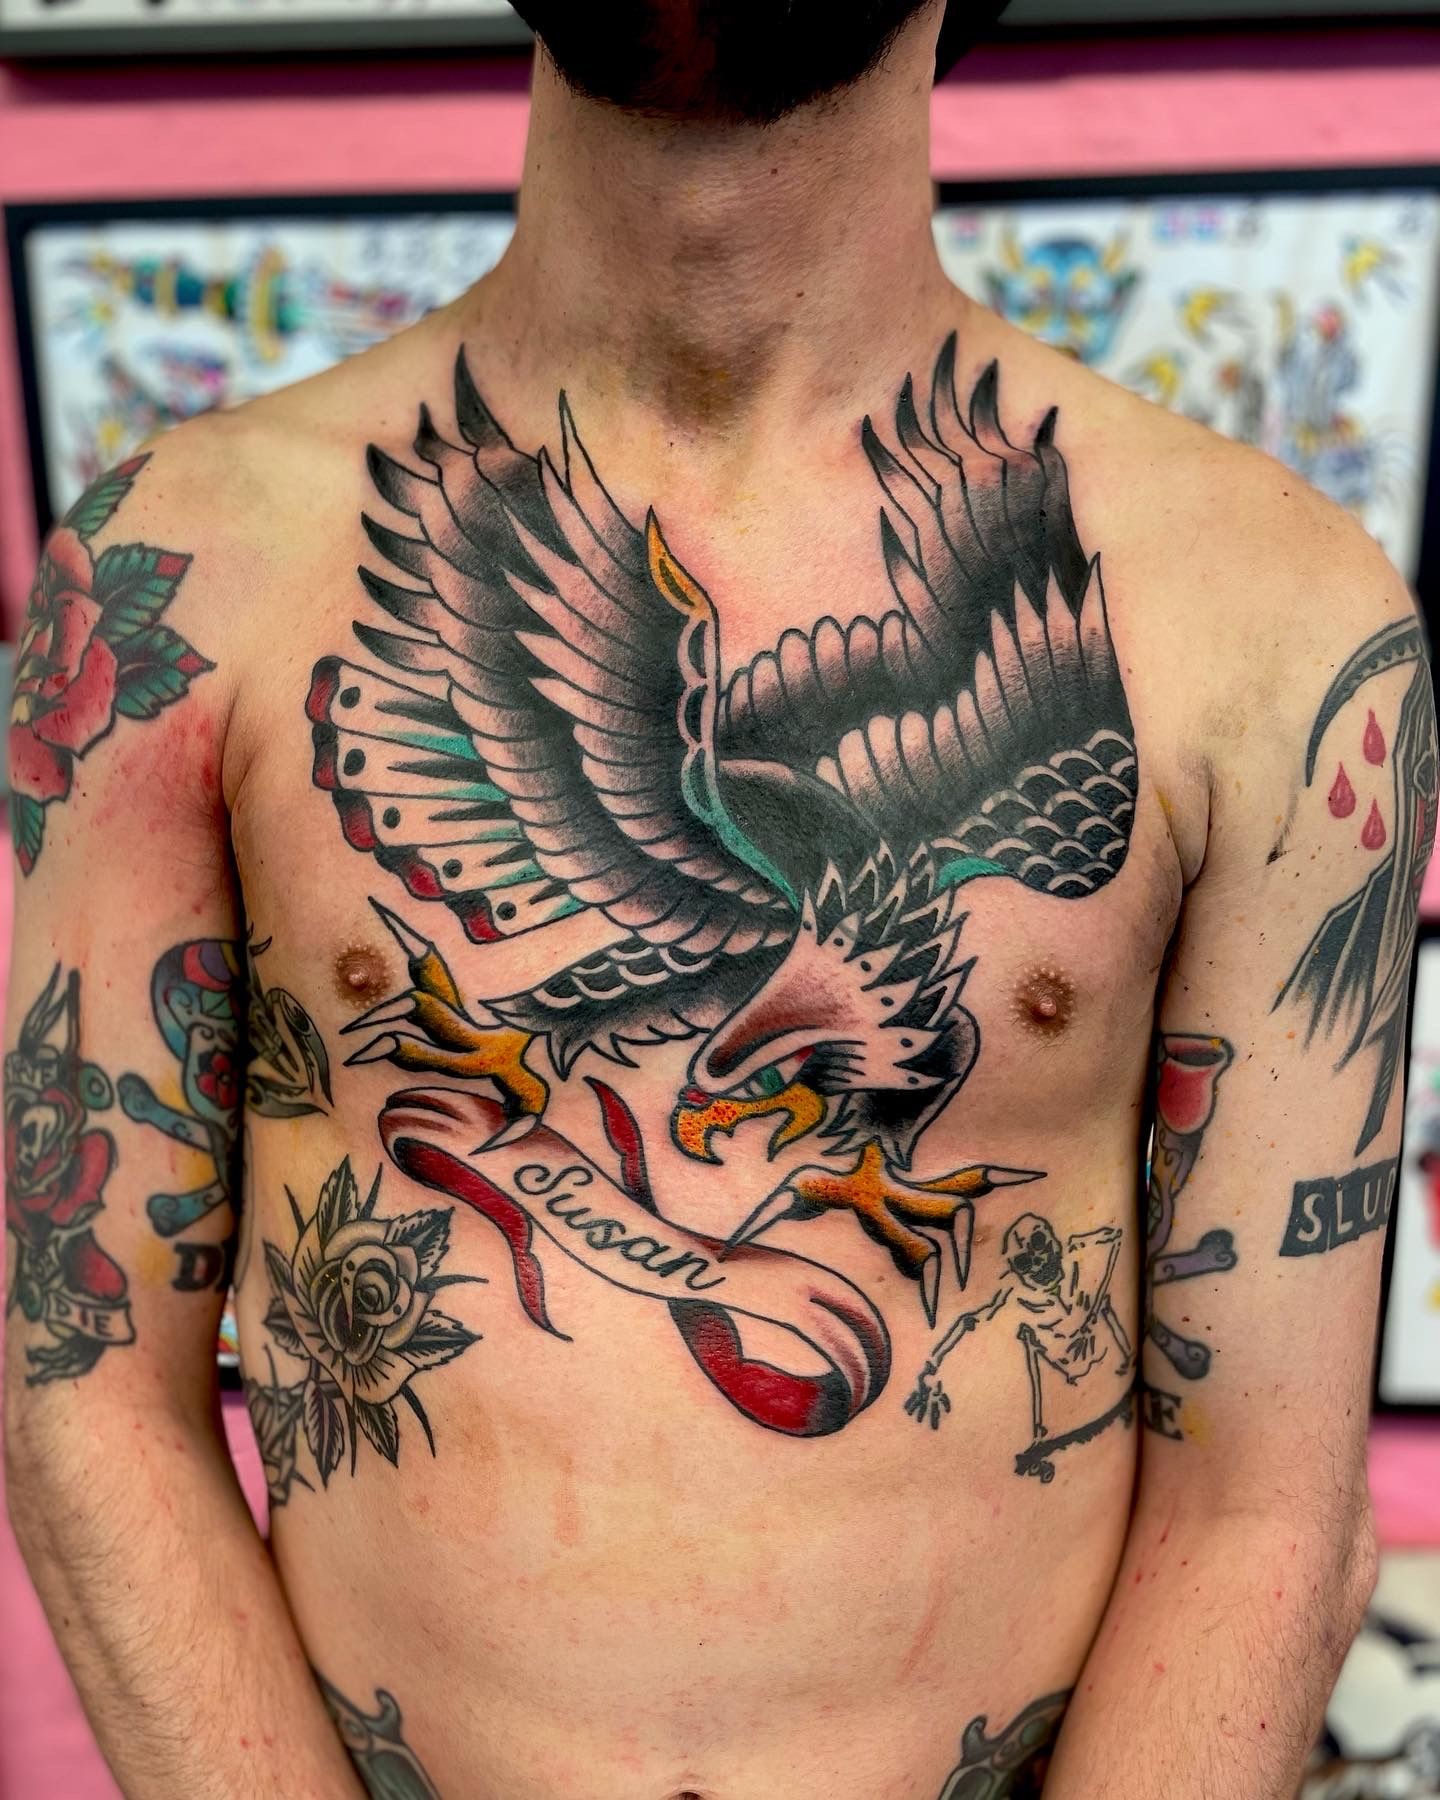 Eagle by Ishi Neve at Heretic Tattoo Studio in Melbourne, Australia : r/ tattoos